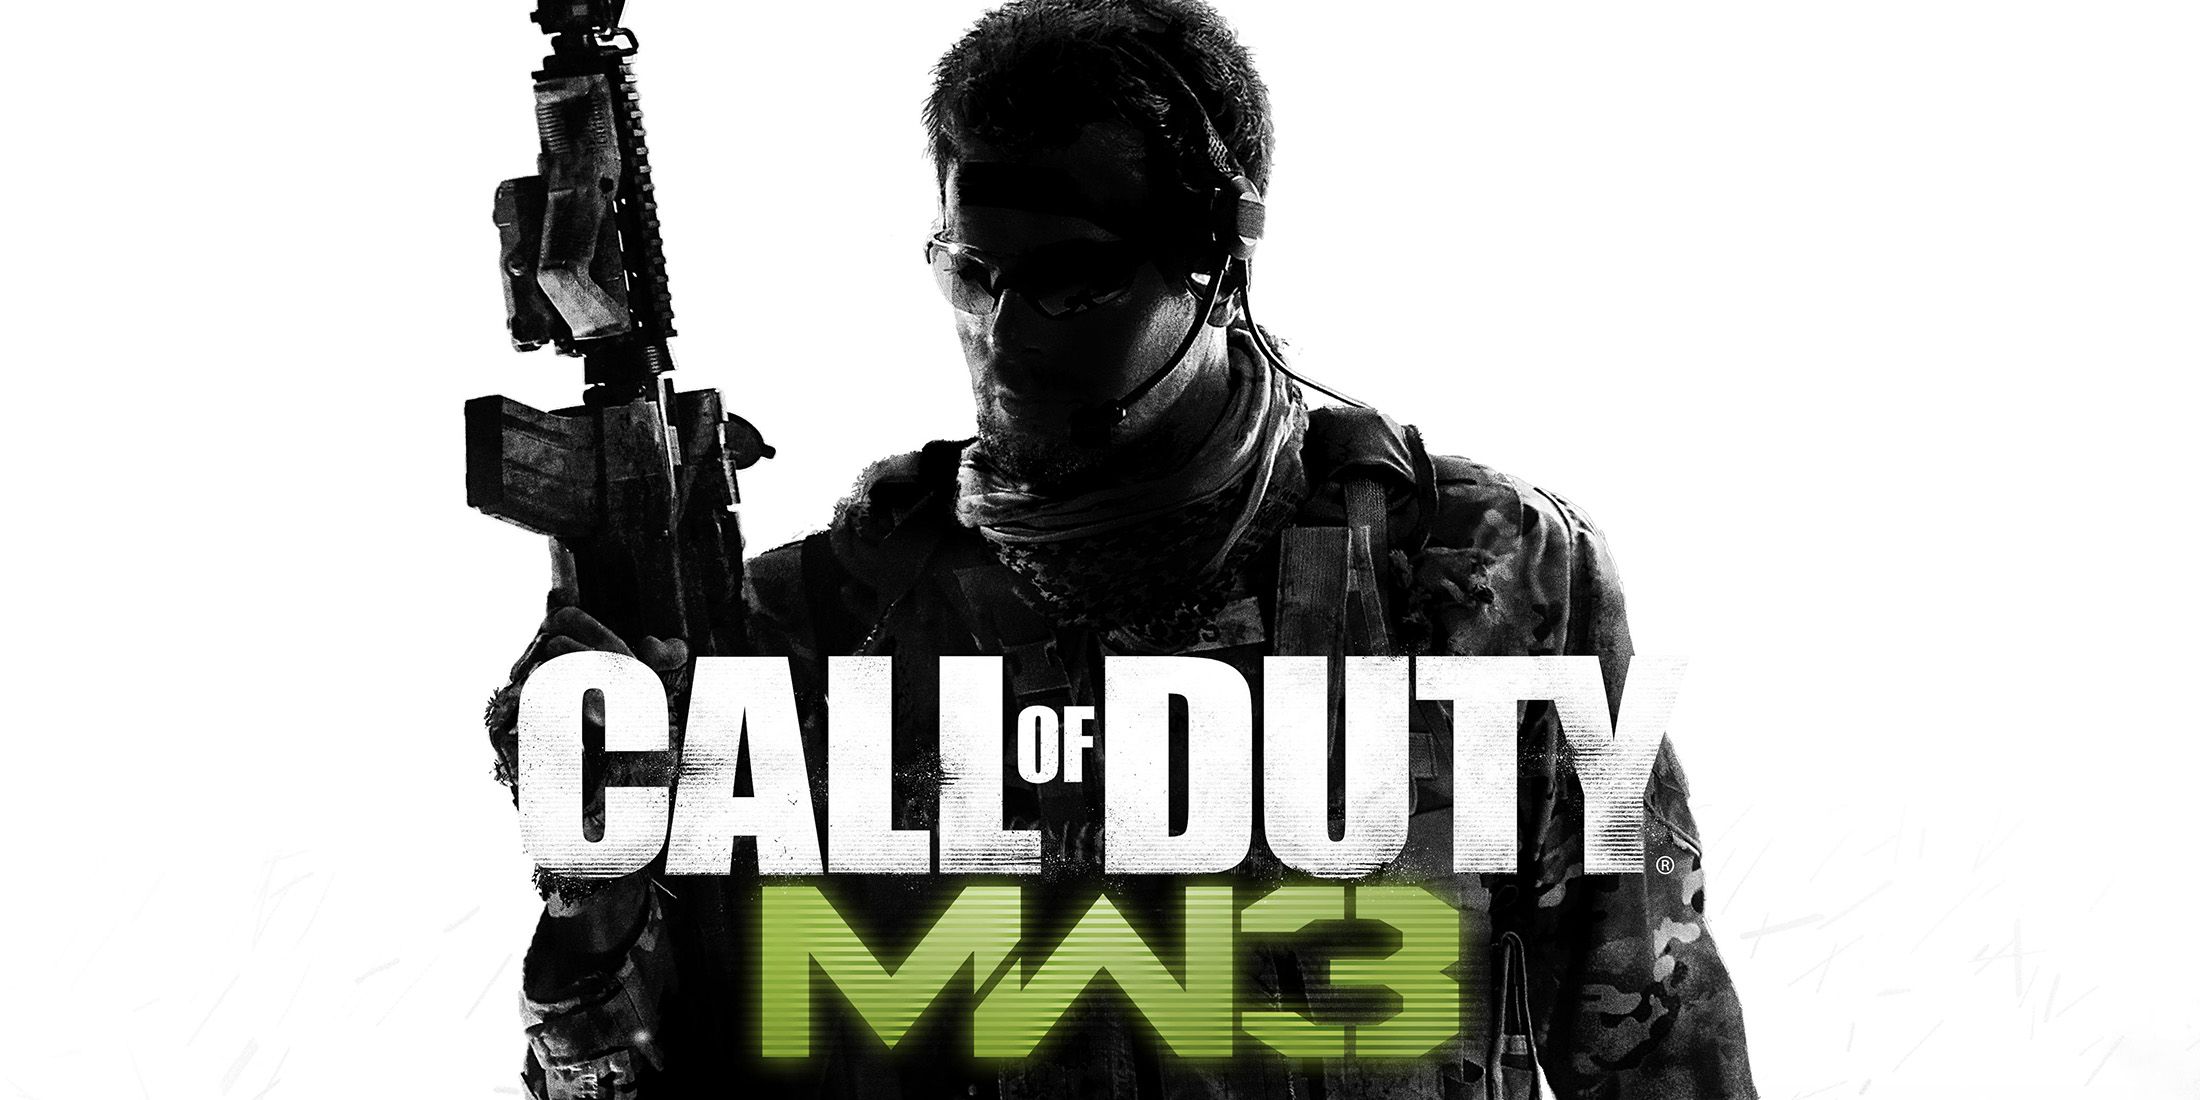 Call of Duty Modern Warfare 3 2011 cover 2x1 crop